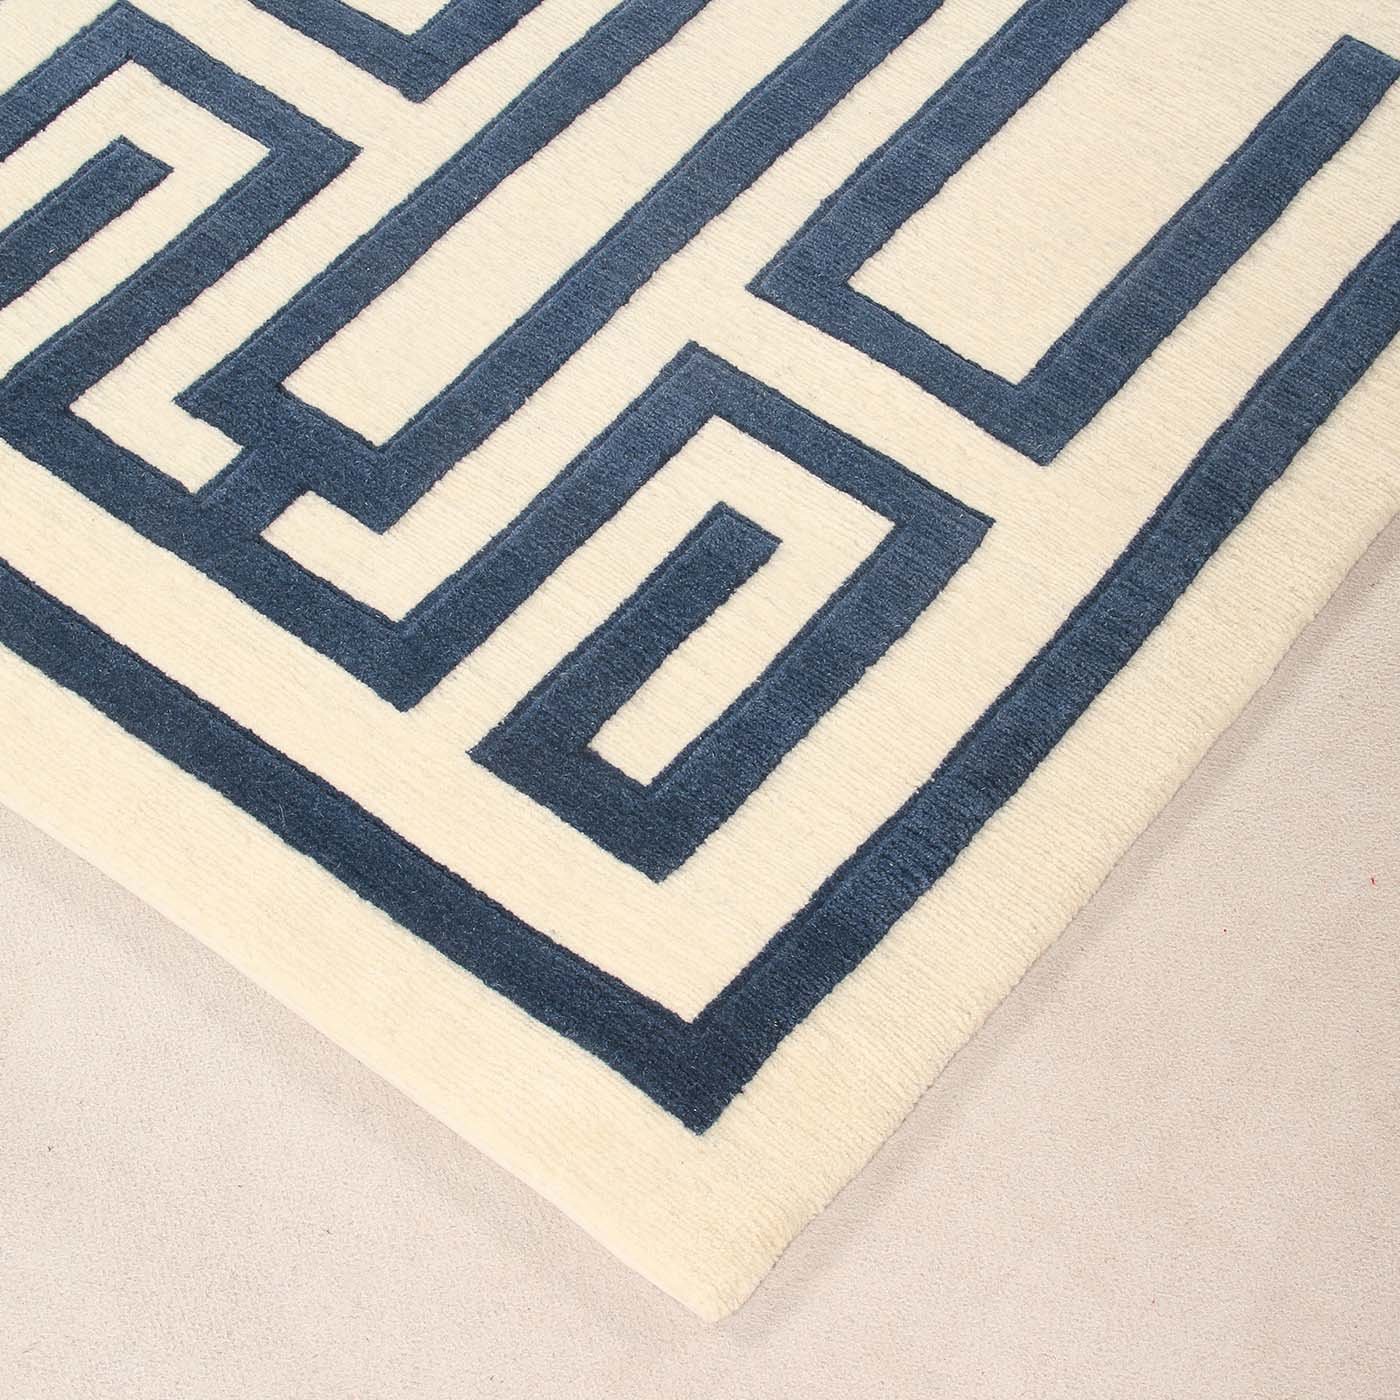 Labirinto Blue Carpet by Gio Ponti - Alternative view 1